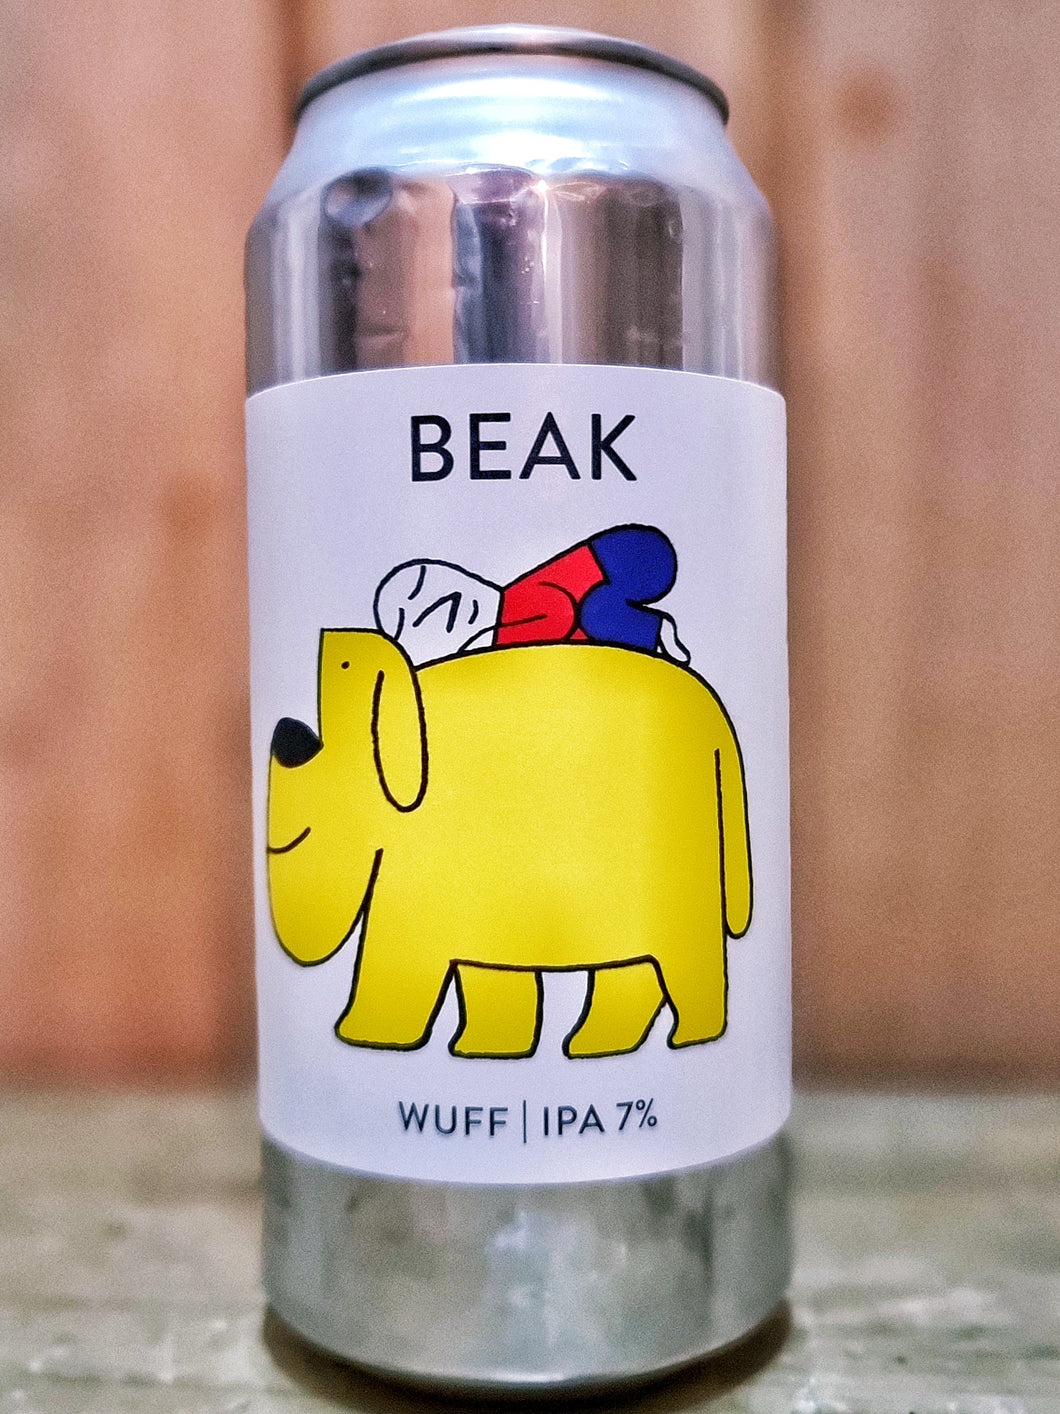 Beak Brewery - Wuff